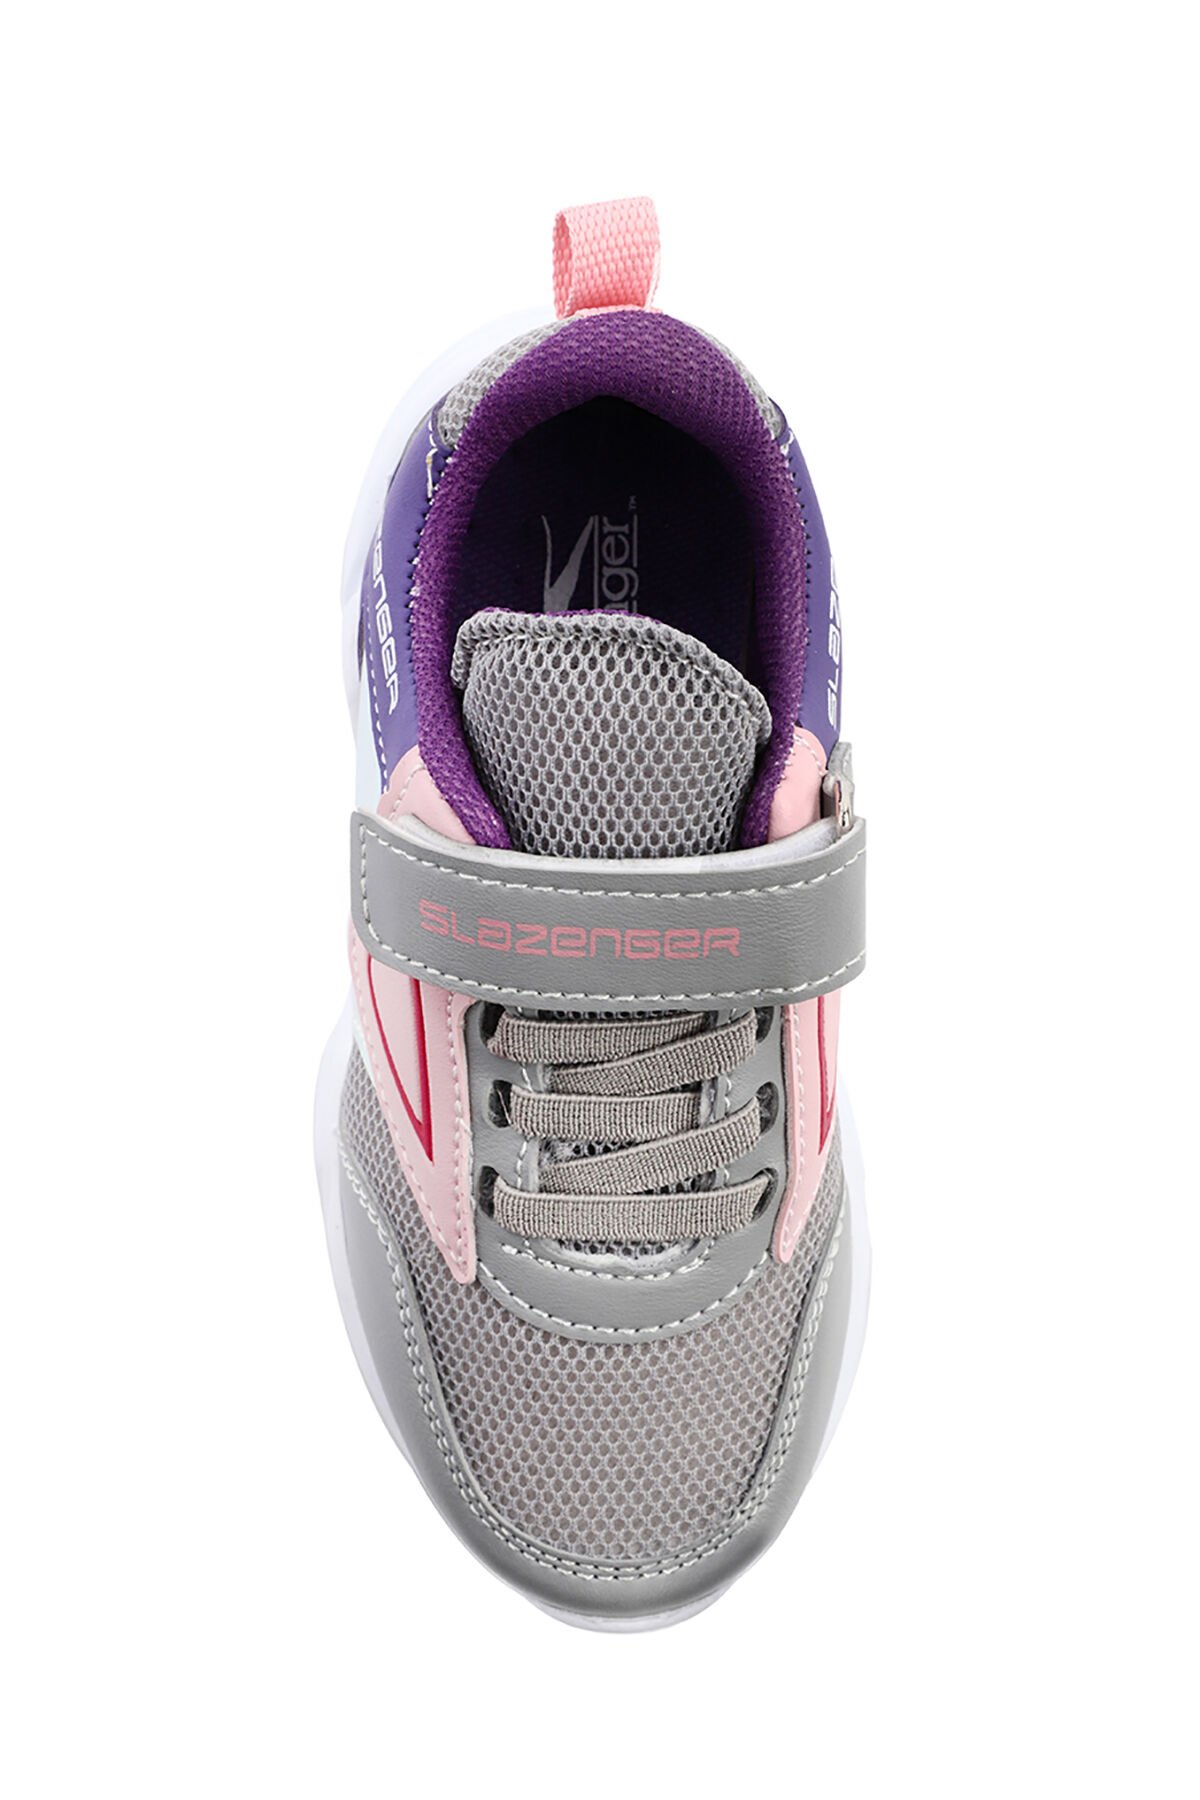 KEVAN Sneaker Kız Çocuk Ayakkabı Gri / Pembe - Thumbnail